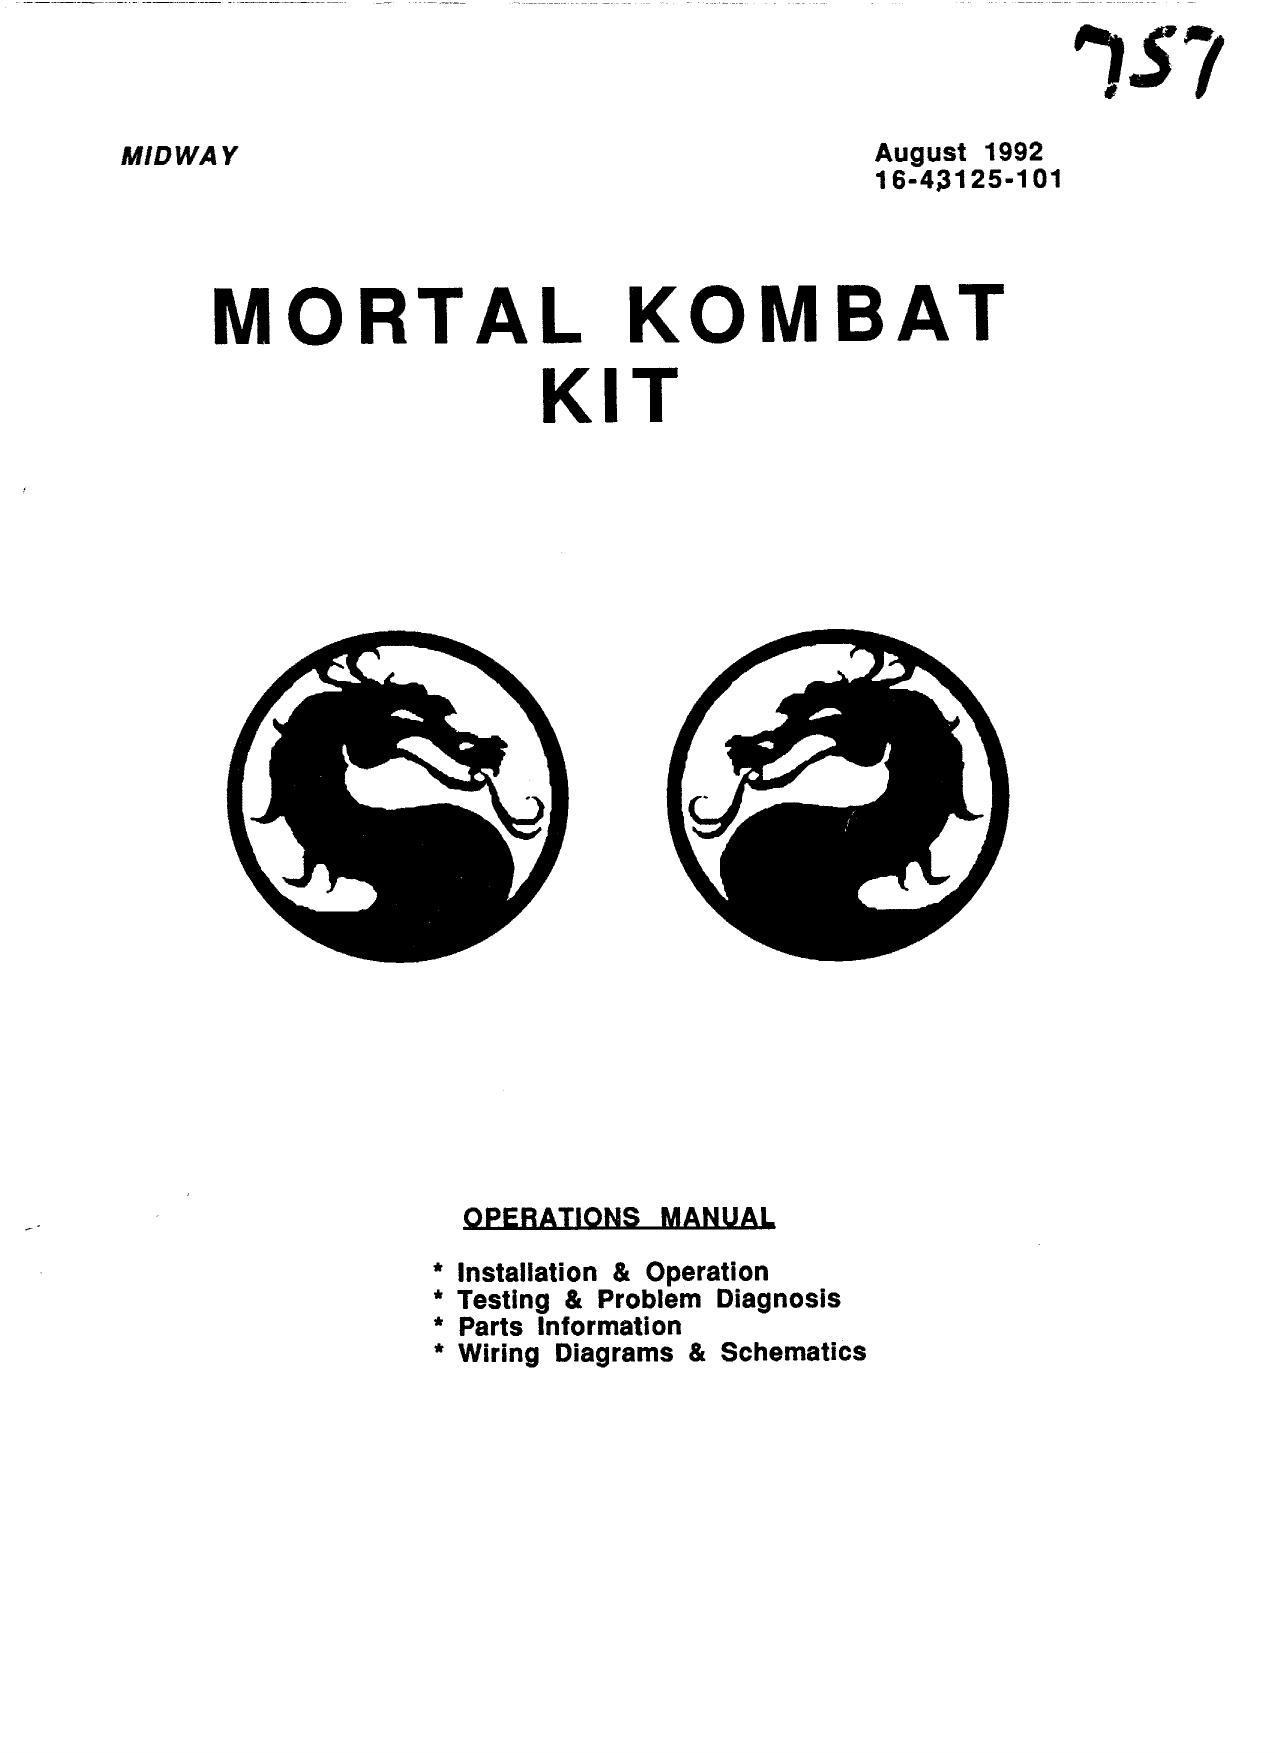 Mortal Kombat (Operations) (U)